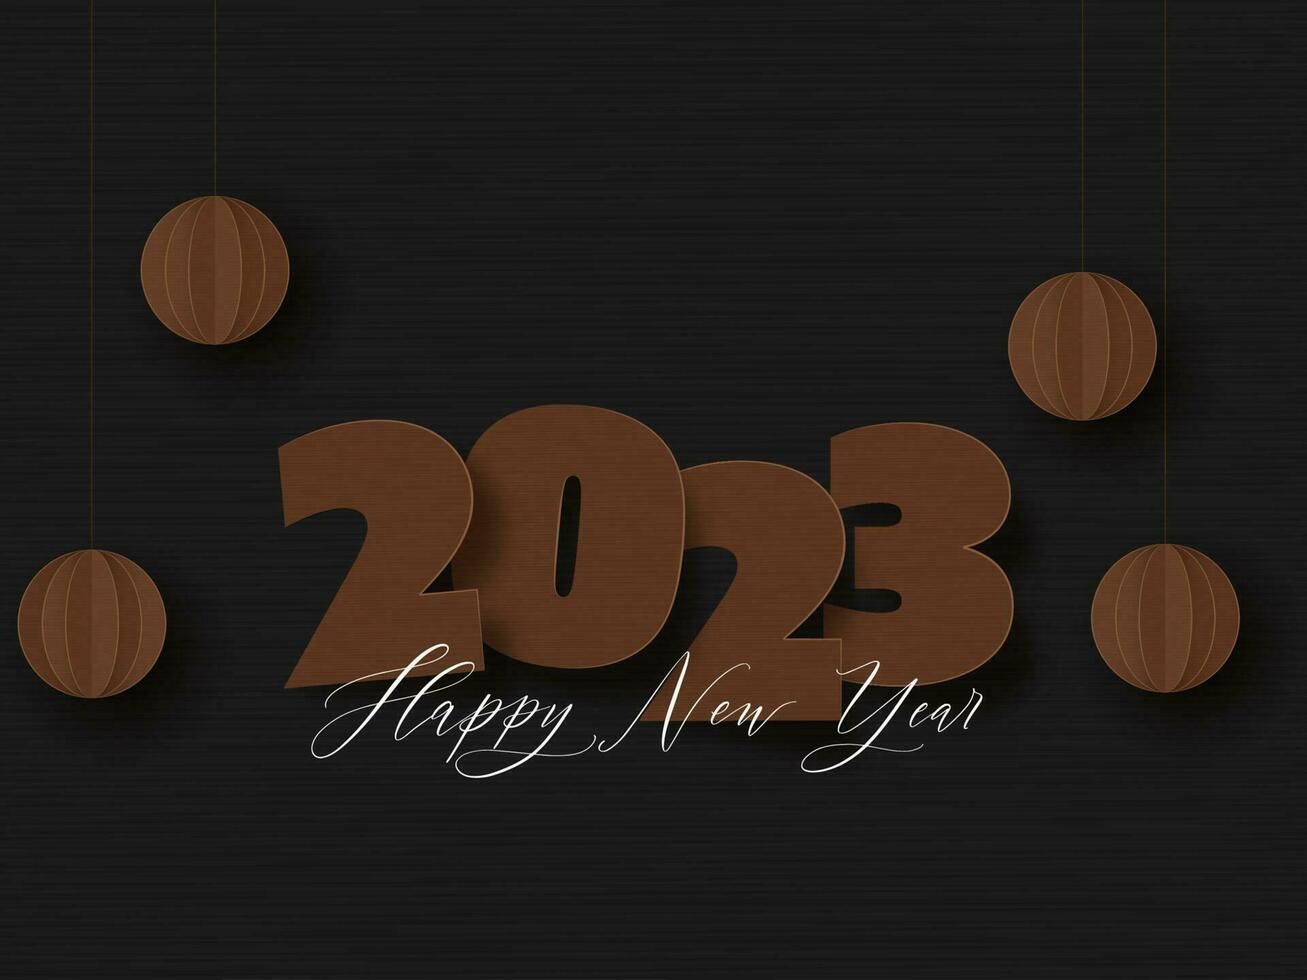 marrón papel cortar 2023 número con adornos decorado en negro raya antecedentes para contento nuevo año concepto. vector